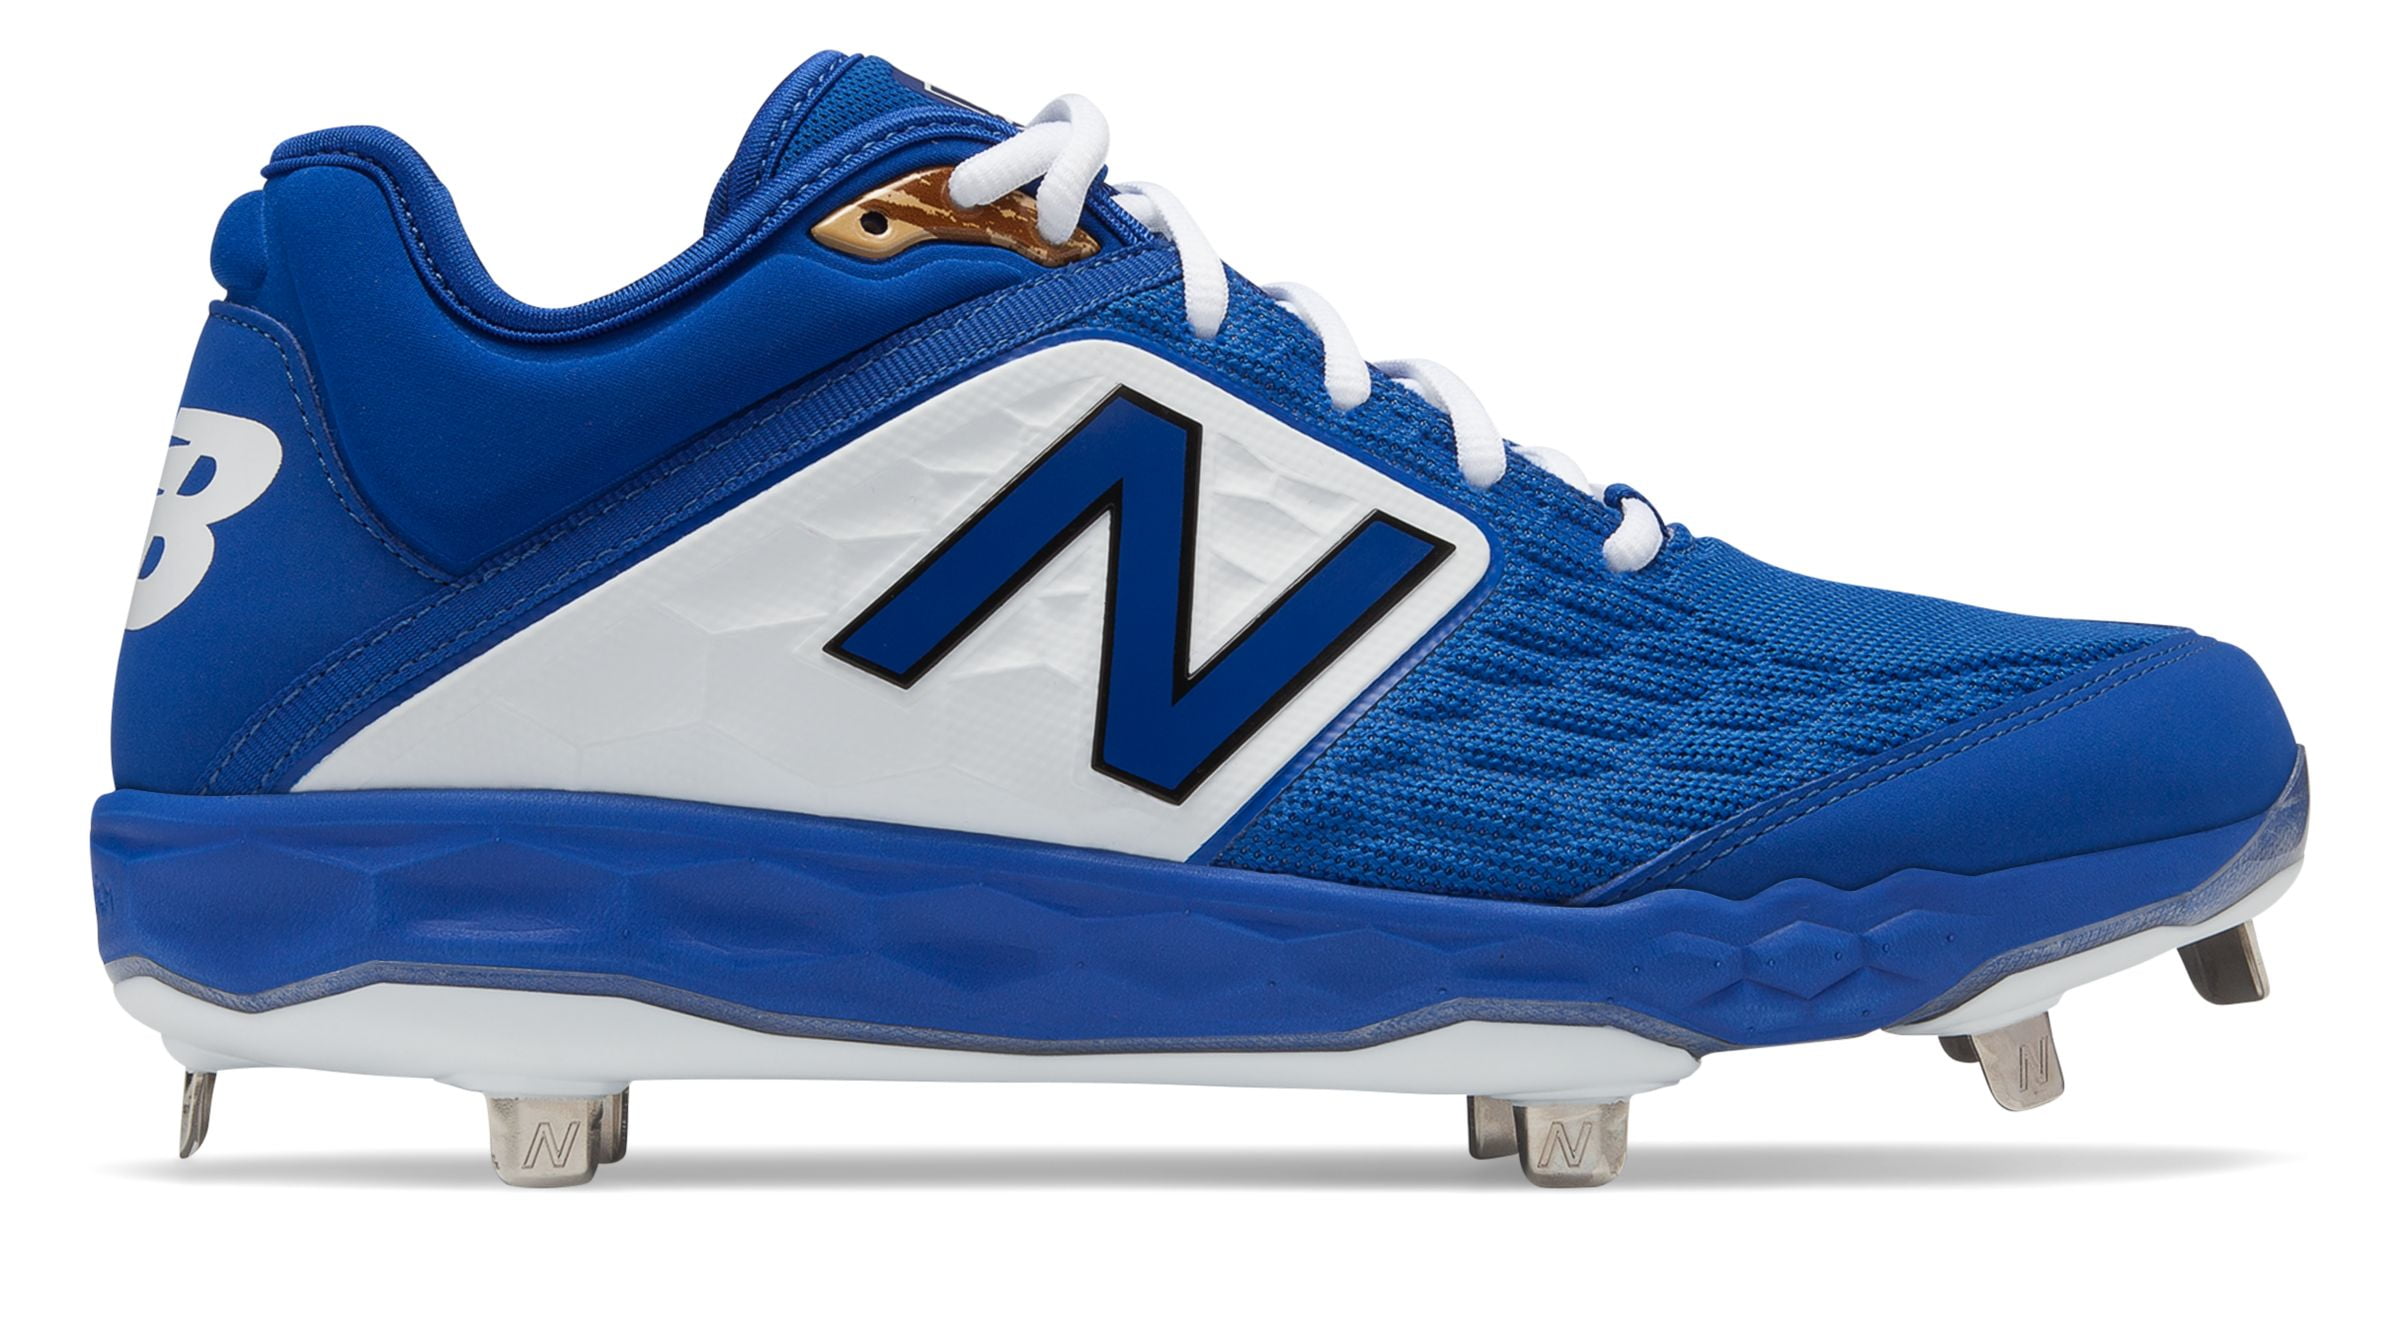 New Balance Low Cut 8v8 Metal Baseball Cleat Mens Shoes Blue ...